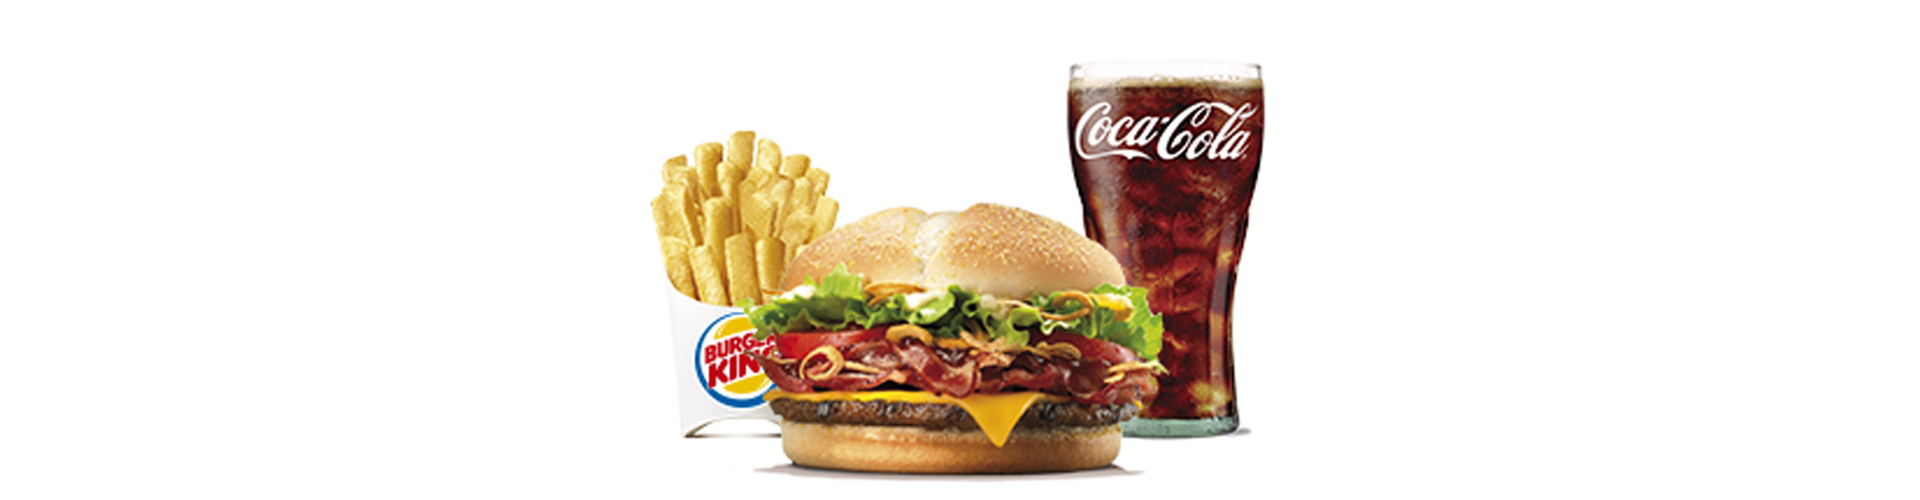 burgerking-40001713-limonada-aros